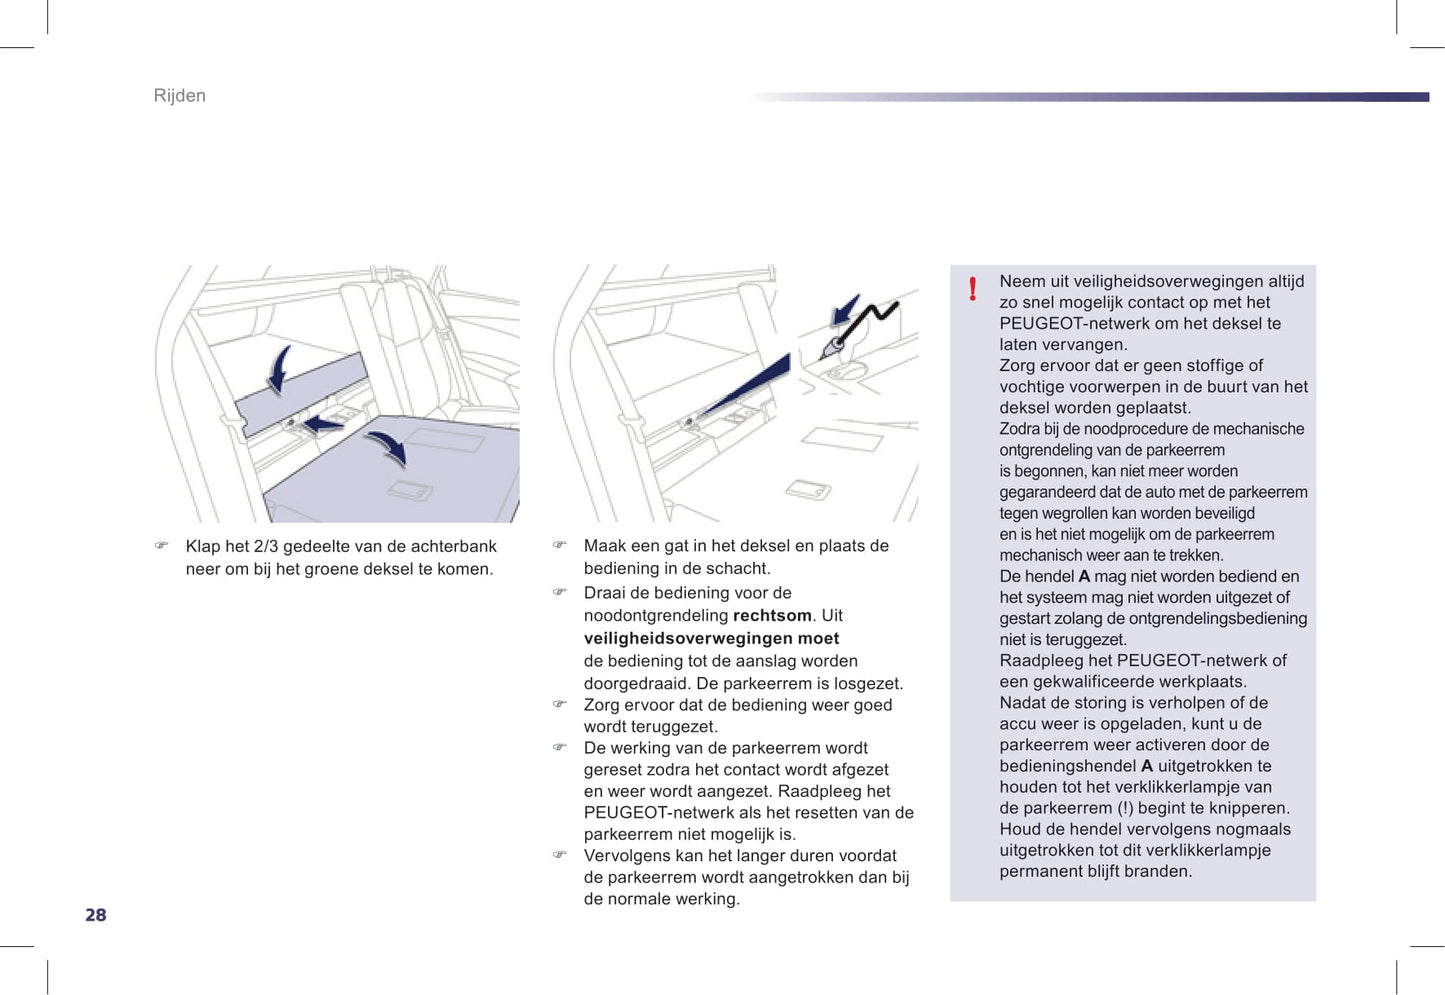 2012-2014 Peugeot 508/508 HYbrid4 Owner's Manual | Dutch